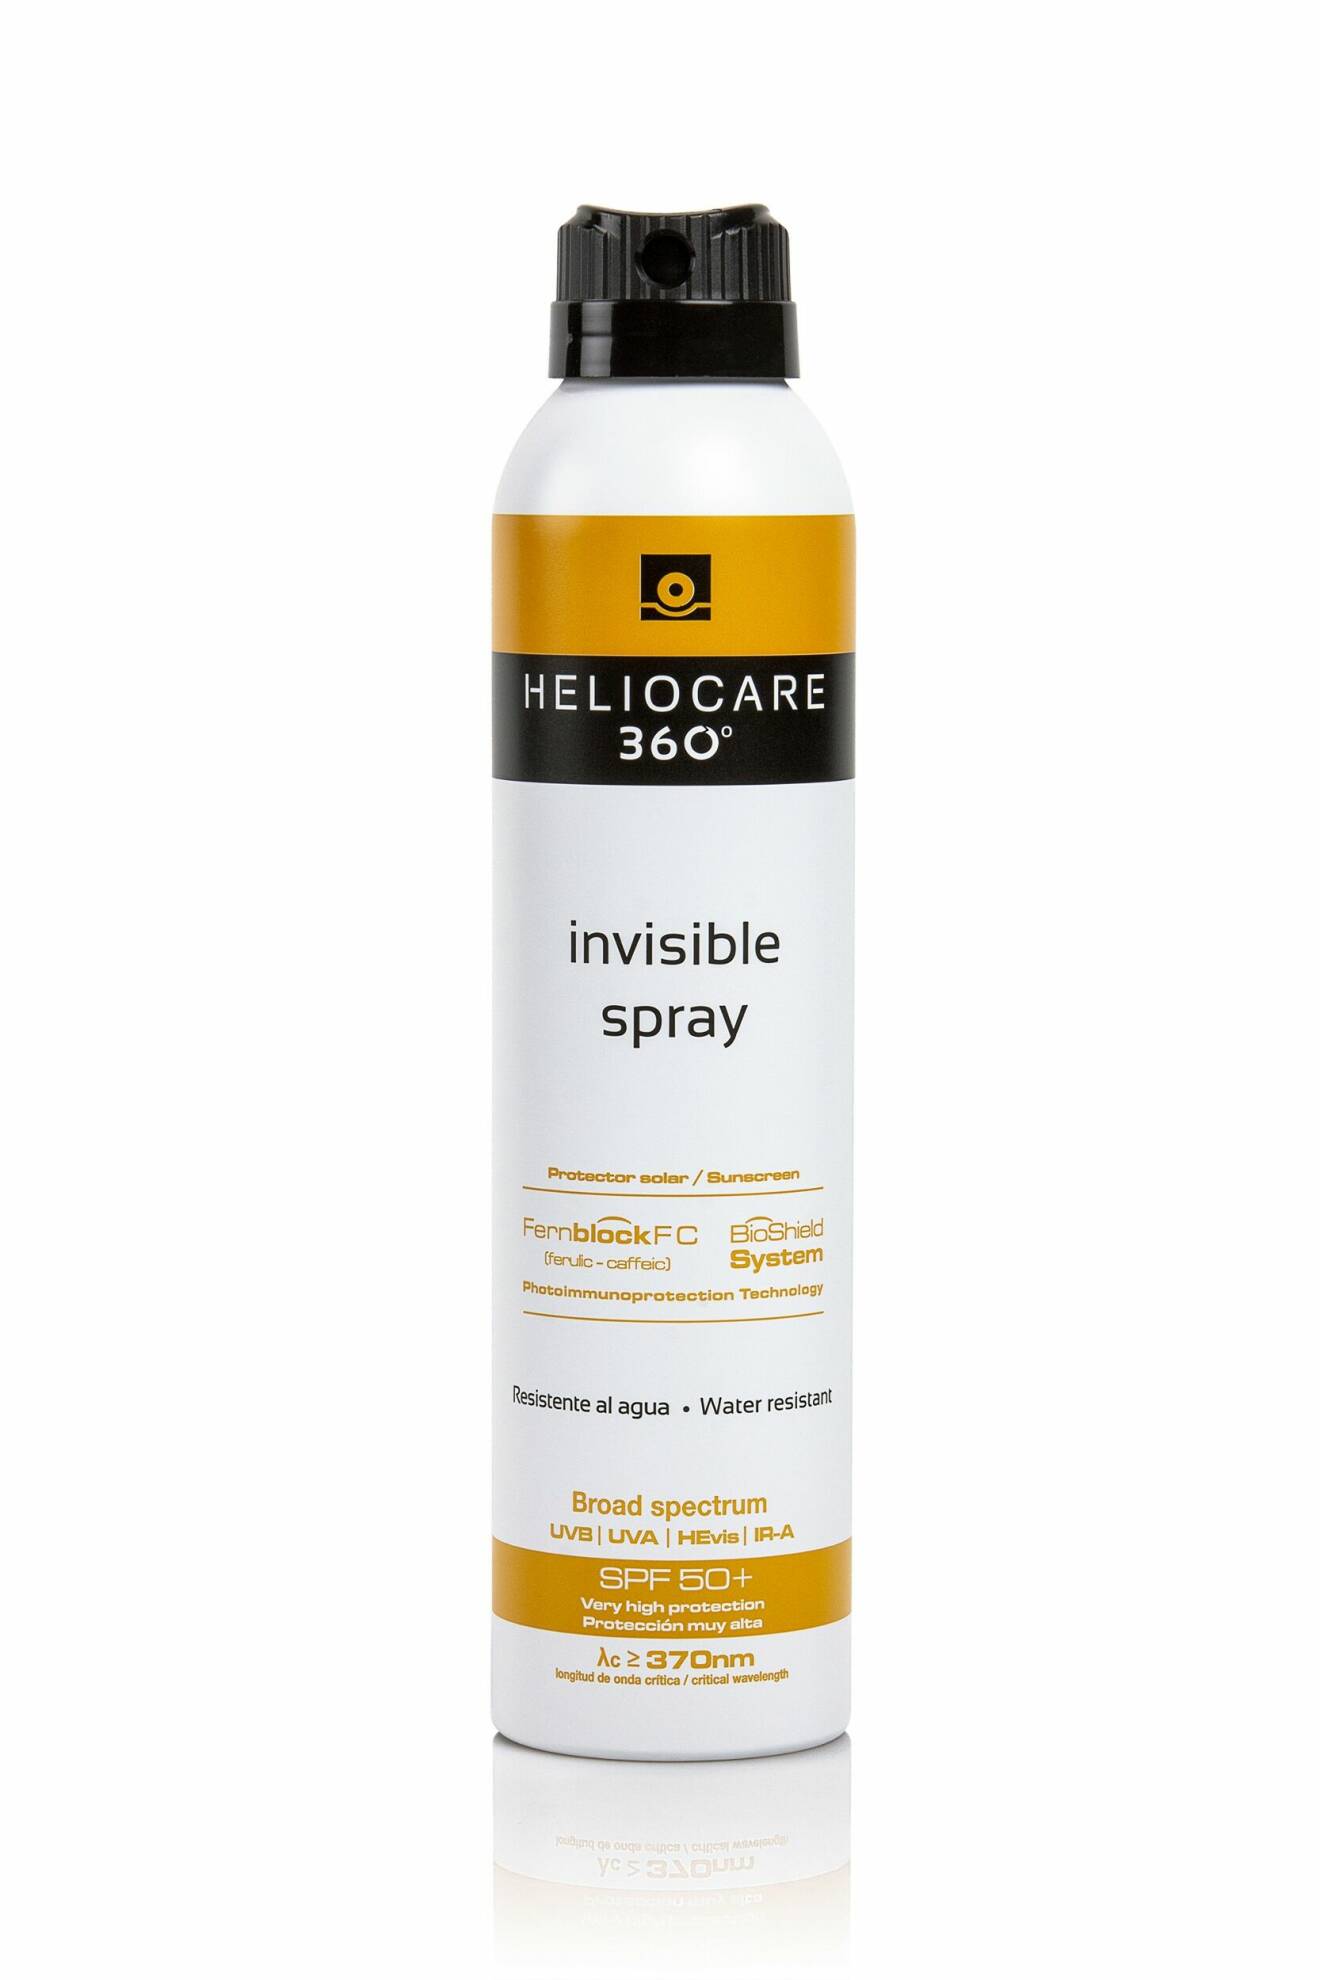 360 Invisible Spray från Heliocare, ca 349 kr.